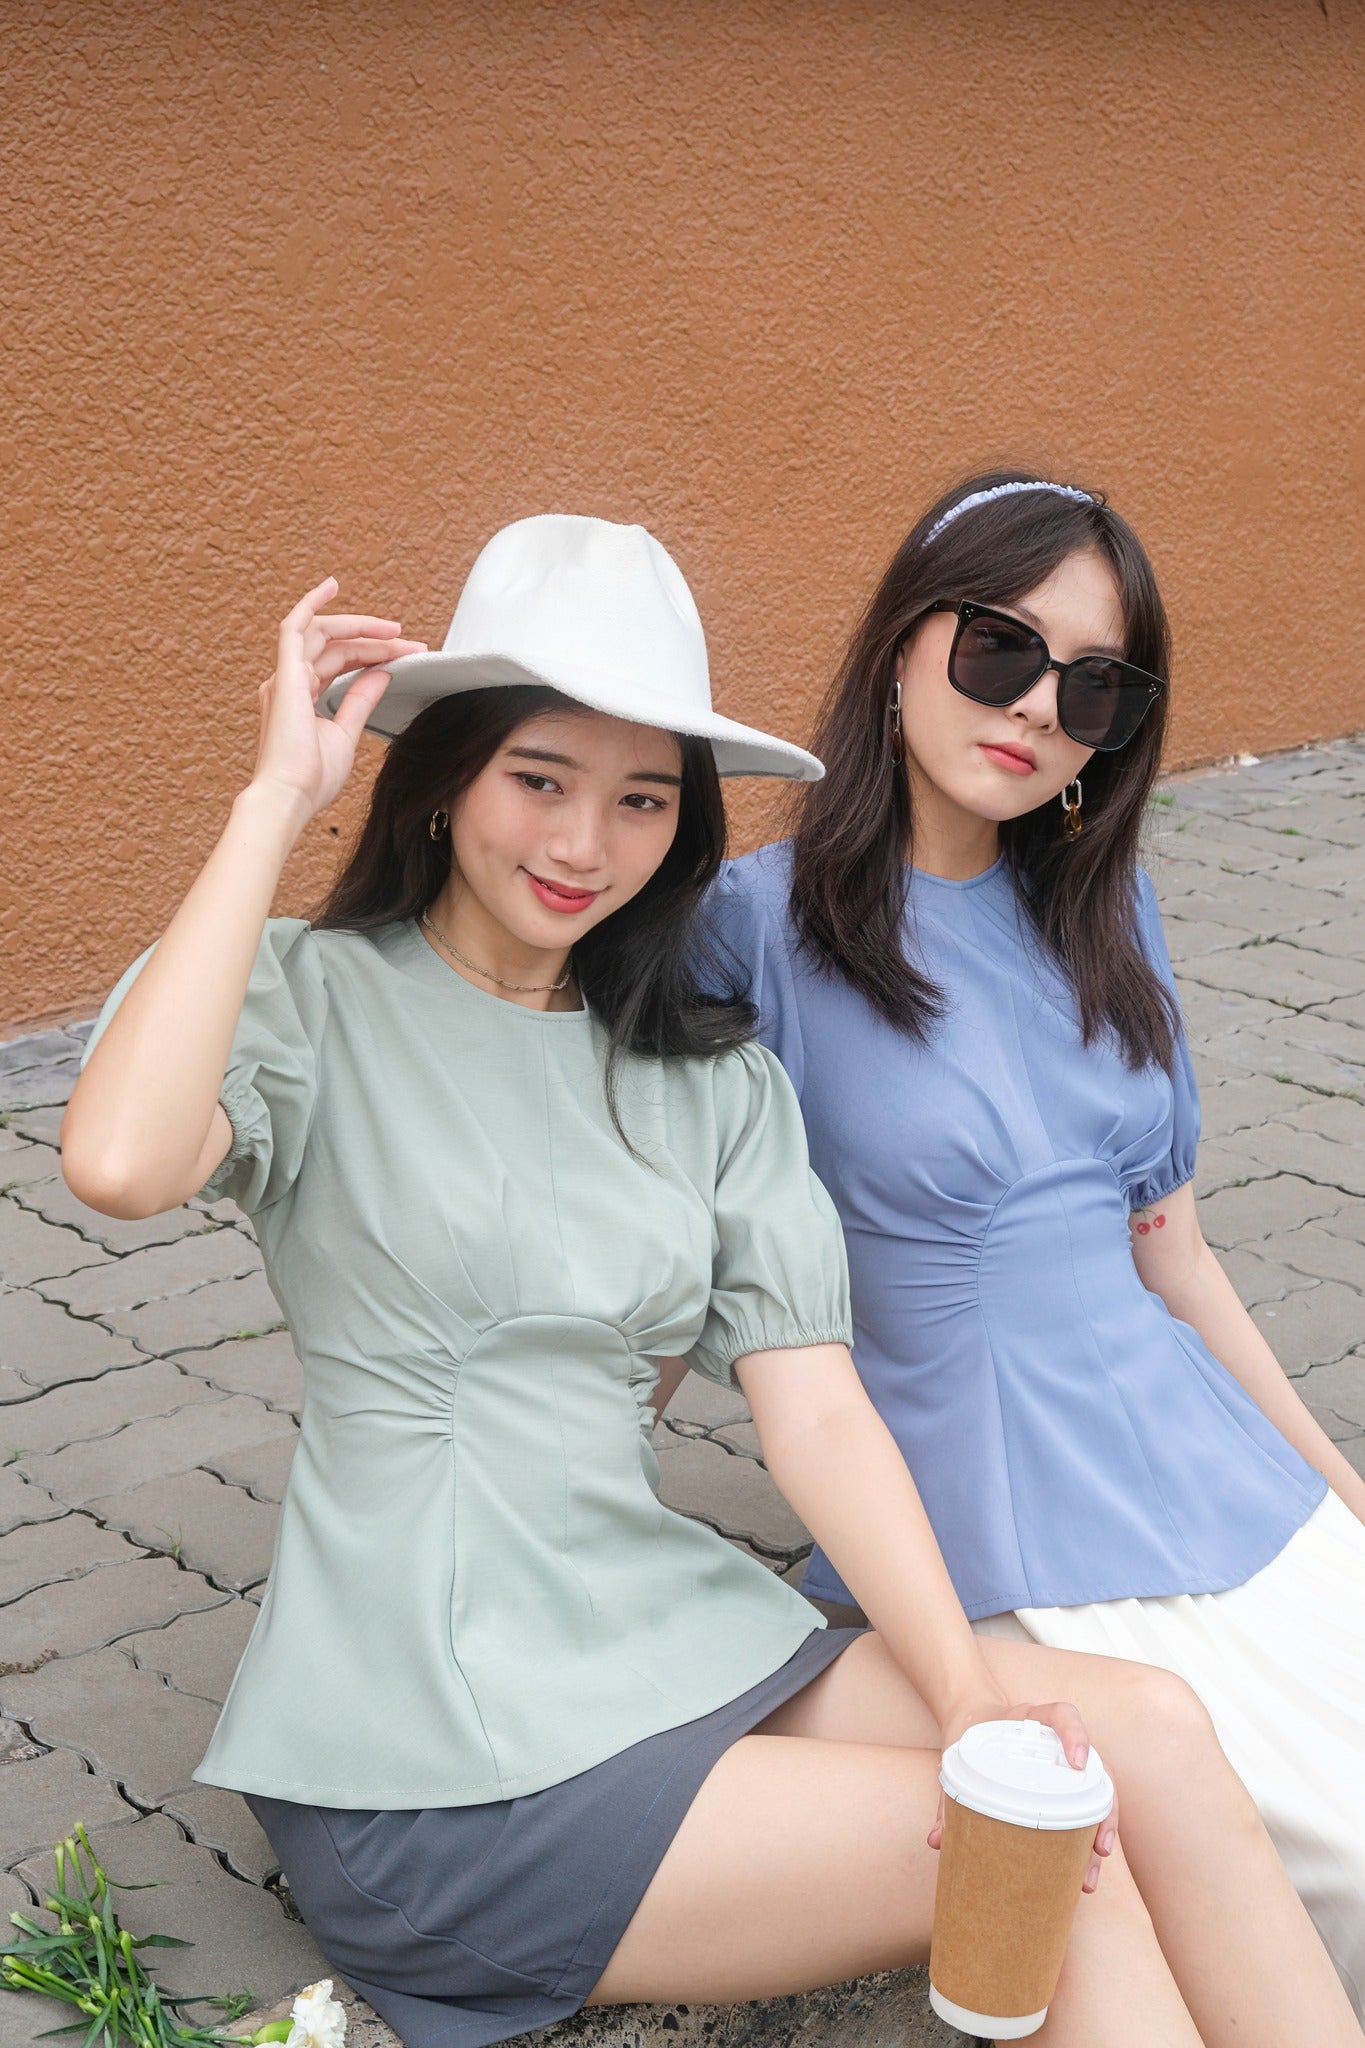 Vietnam Clothing